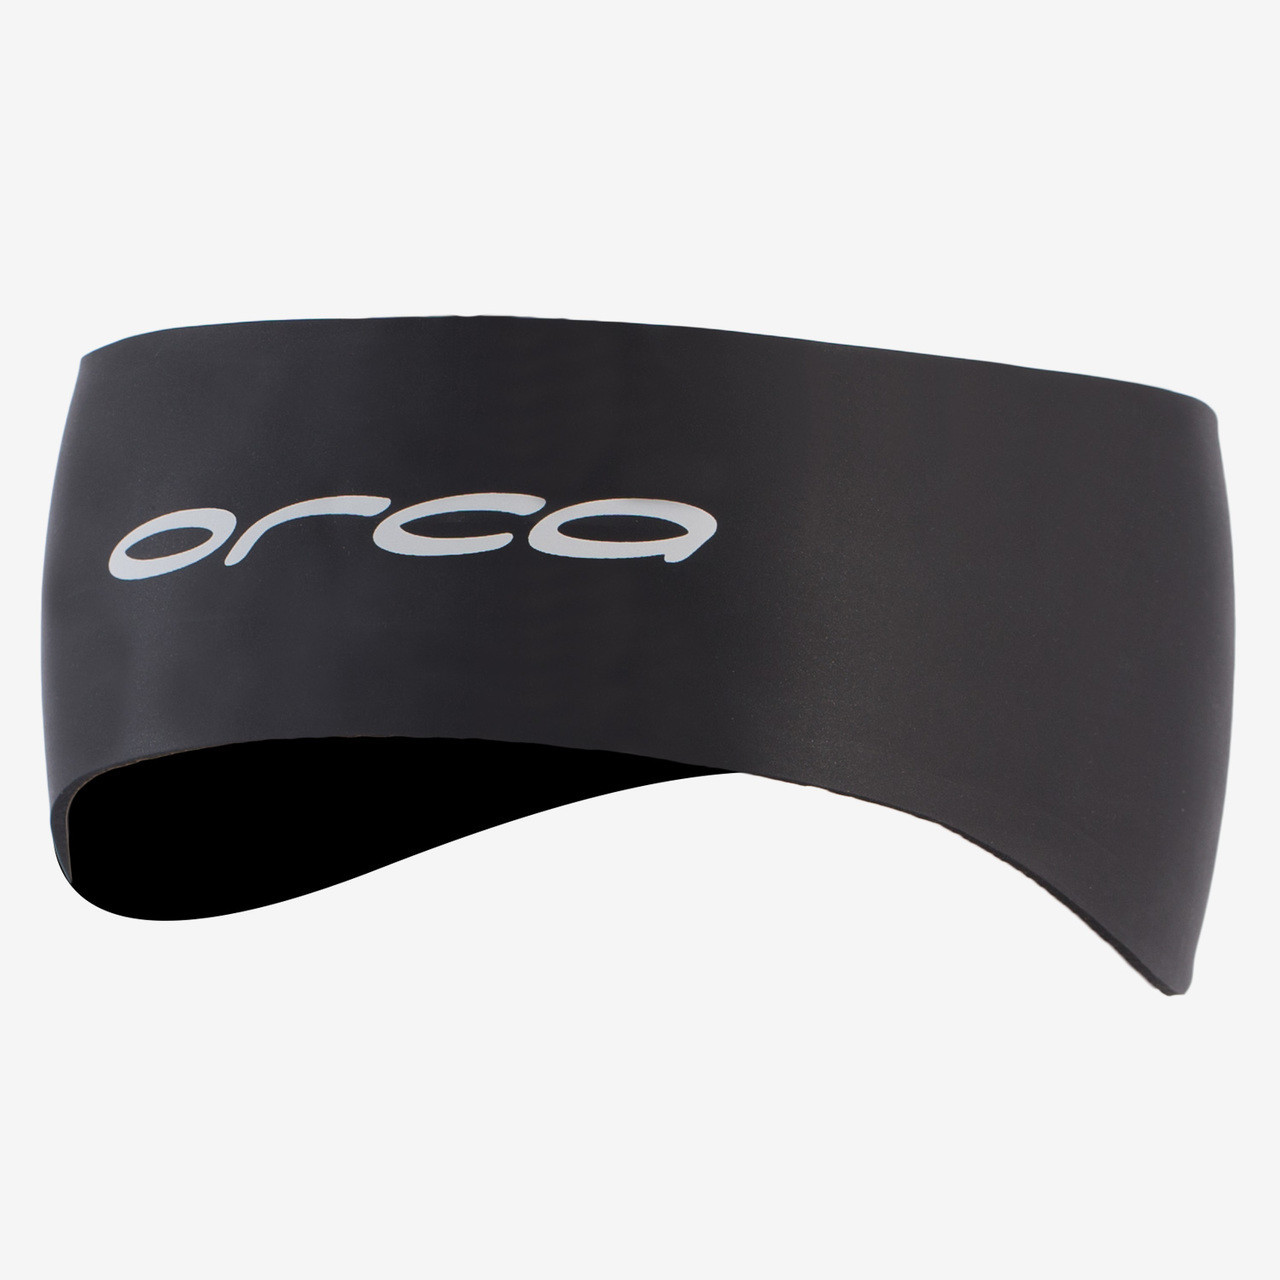 Orca Neoprene Headband - 2019 price